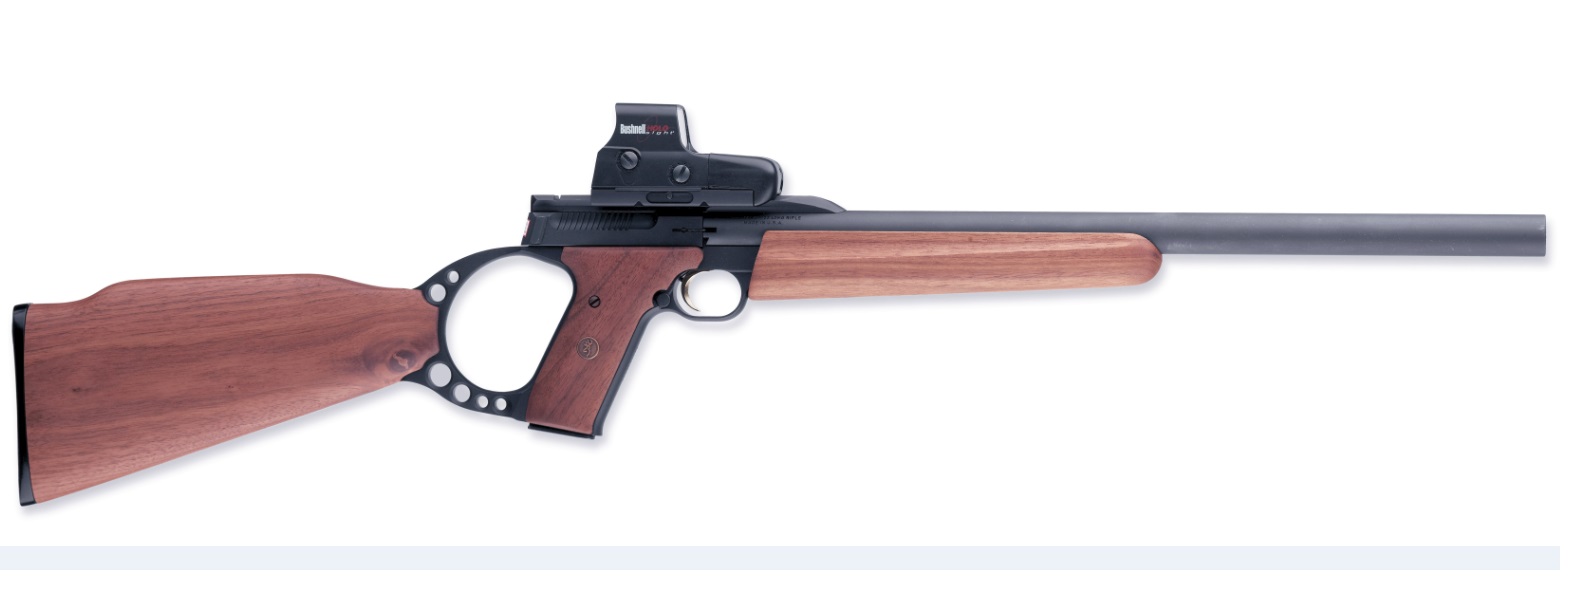 Buy Browning Buck Mark Target Rifle, .22lr, 18 Inch Bull Barrel Online